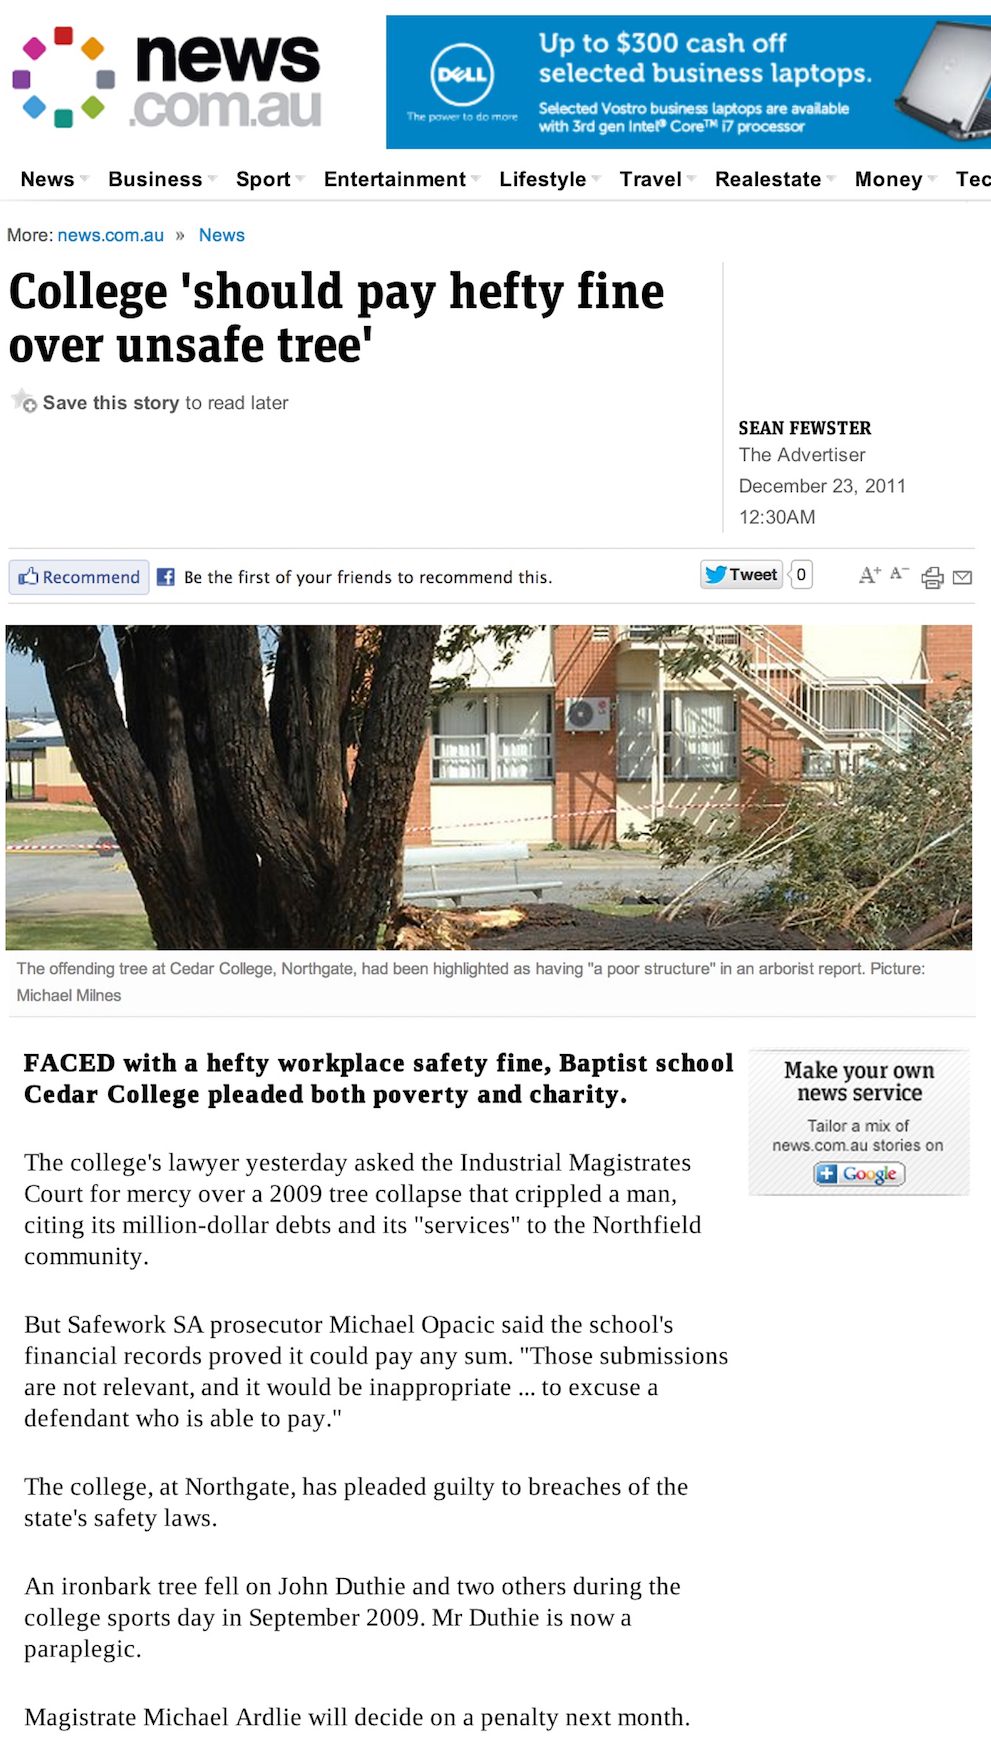 a newspaper describing the safework sa prosecution of Cedar College